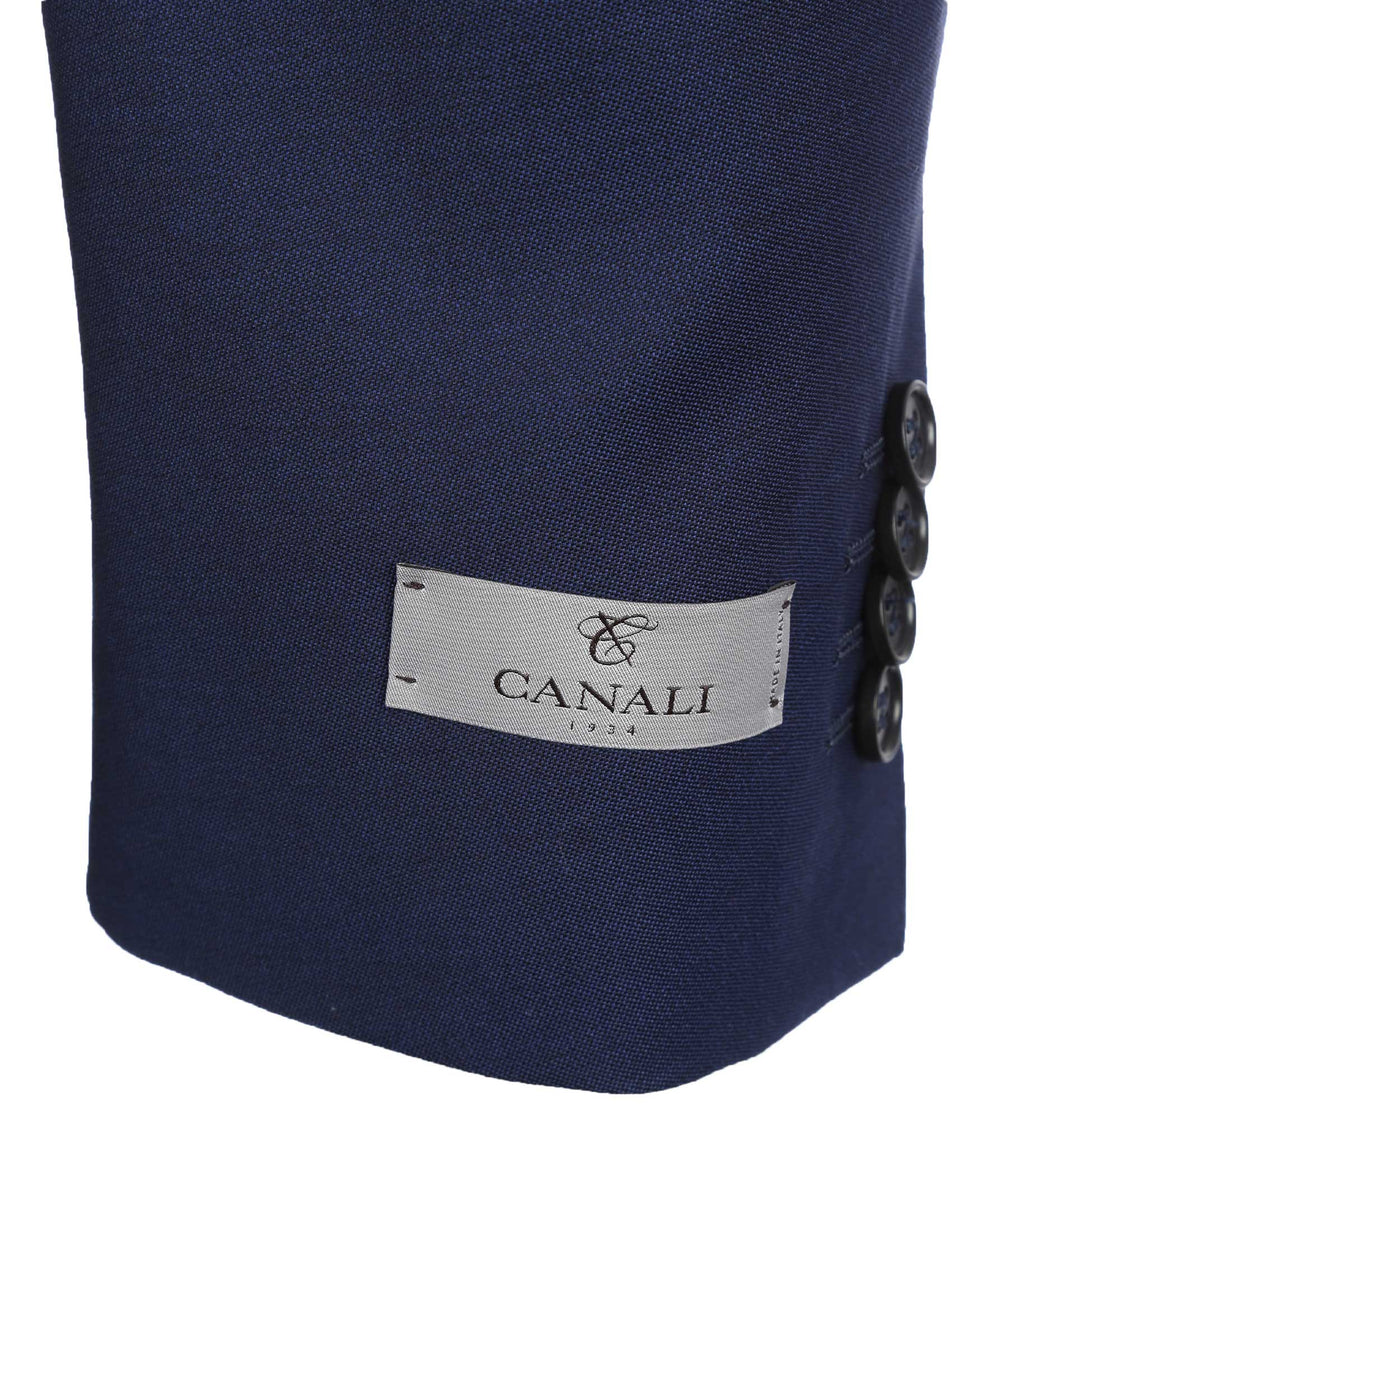 Canali Plain Notch Lapel Suit in Navy Cuff